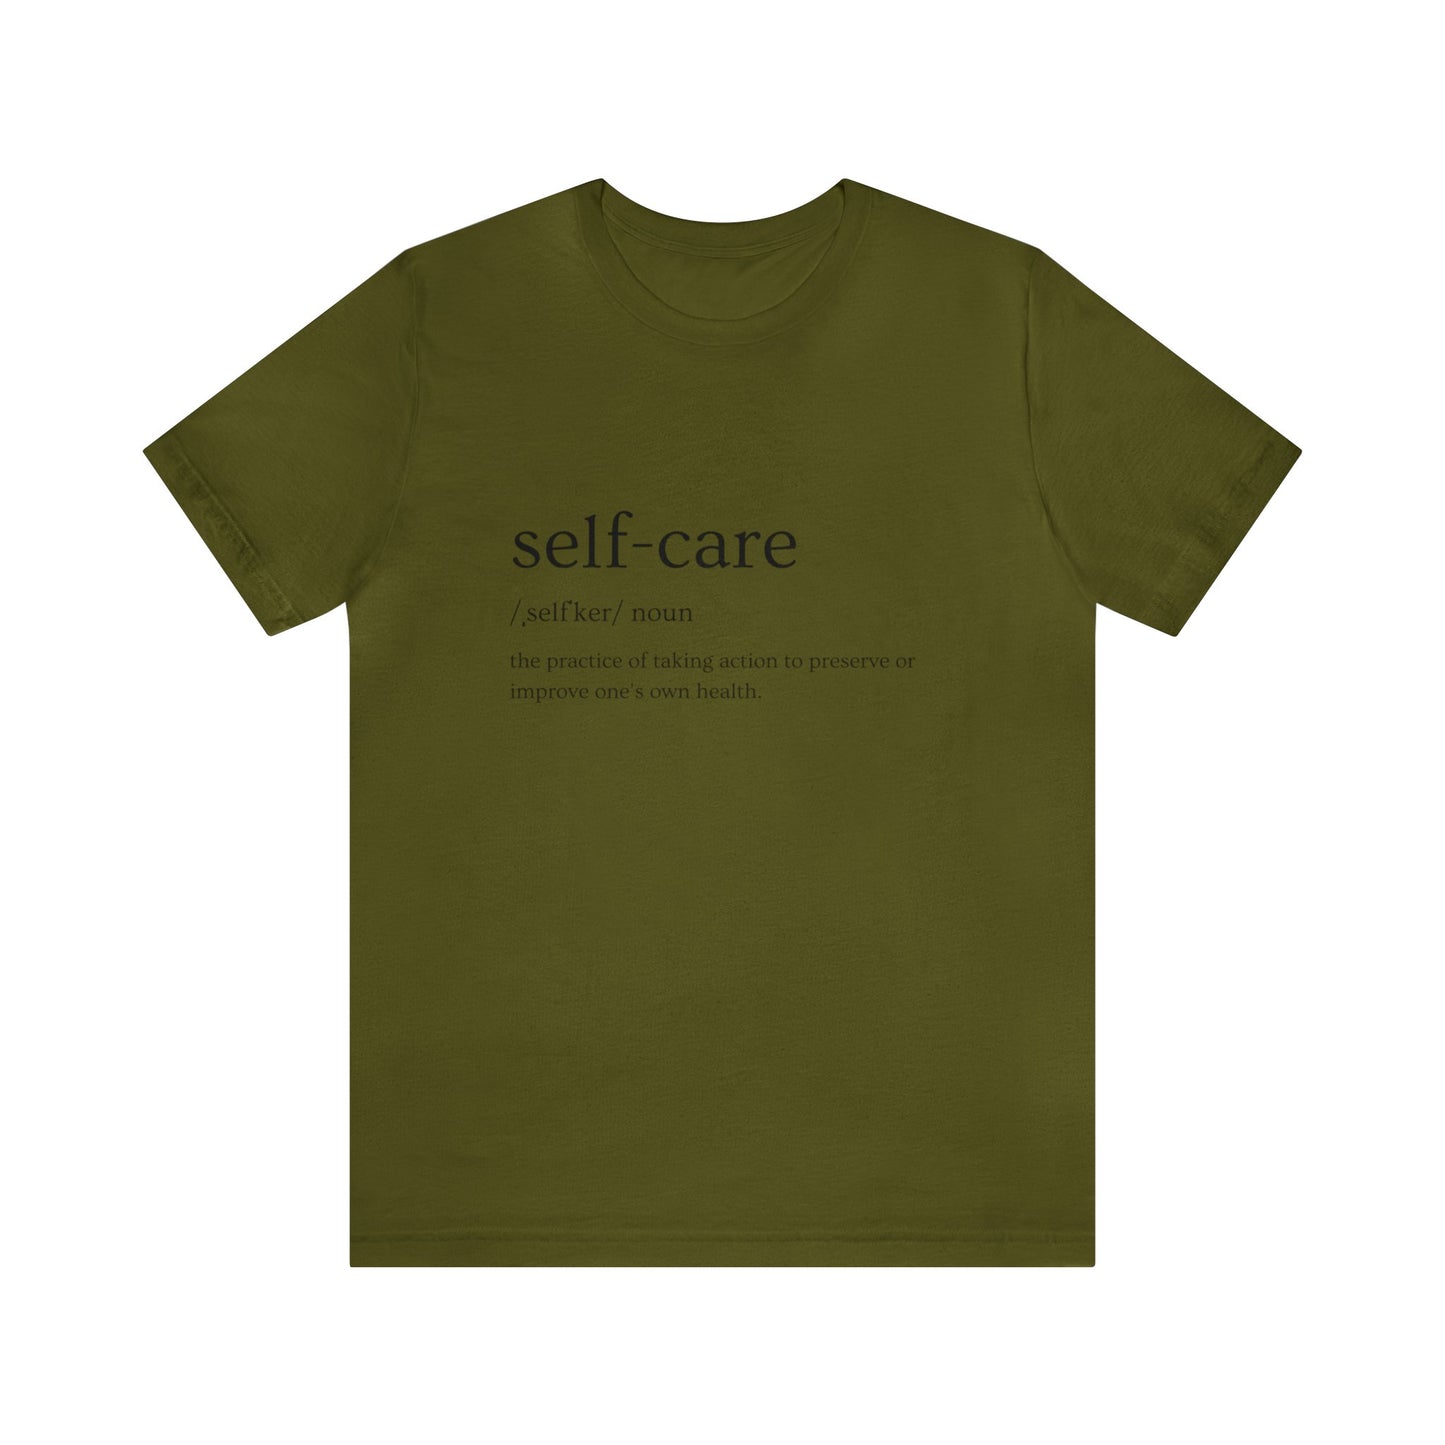 Bella+Canvas_ Self care_Unisex Jersey Short Sleeve Tee